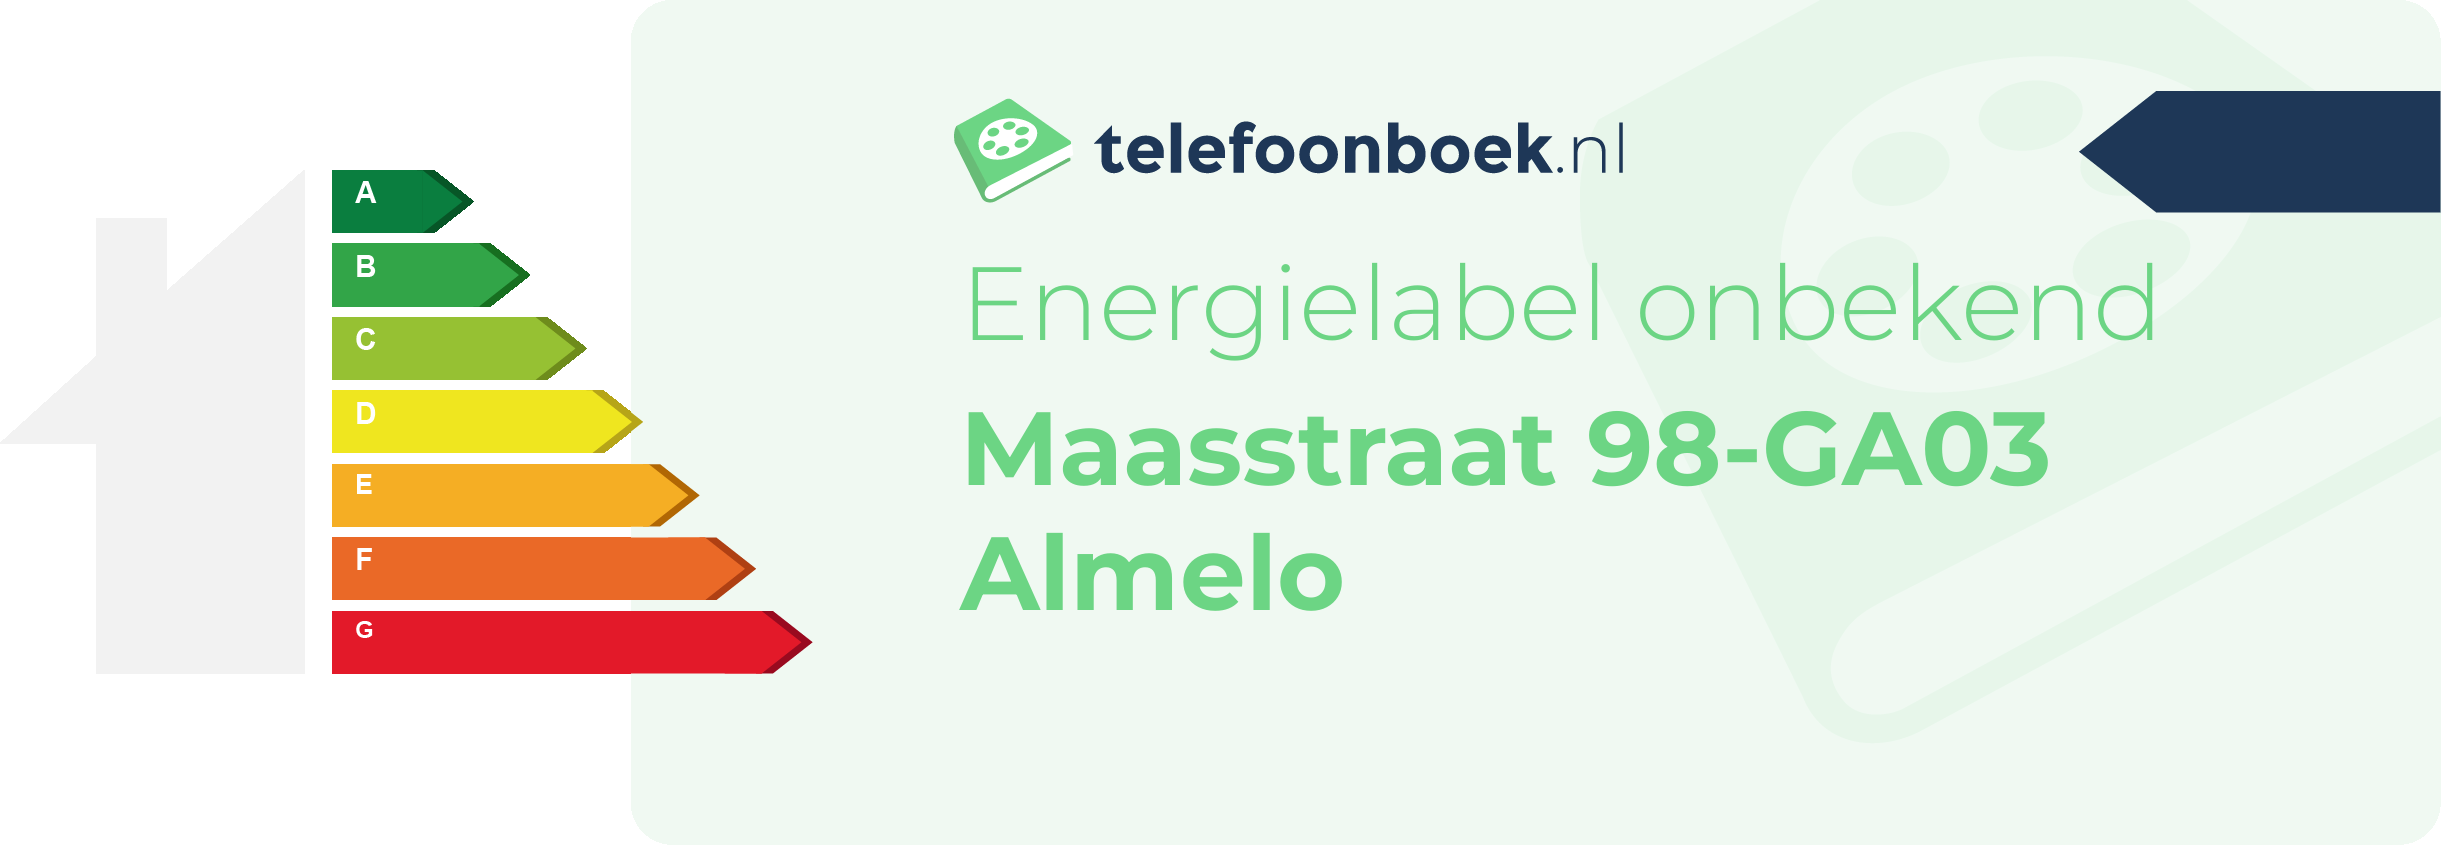 Energielabel Maasstraat 98-GA03 Almelo